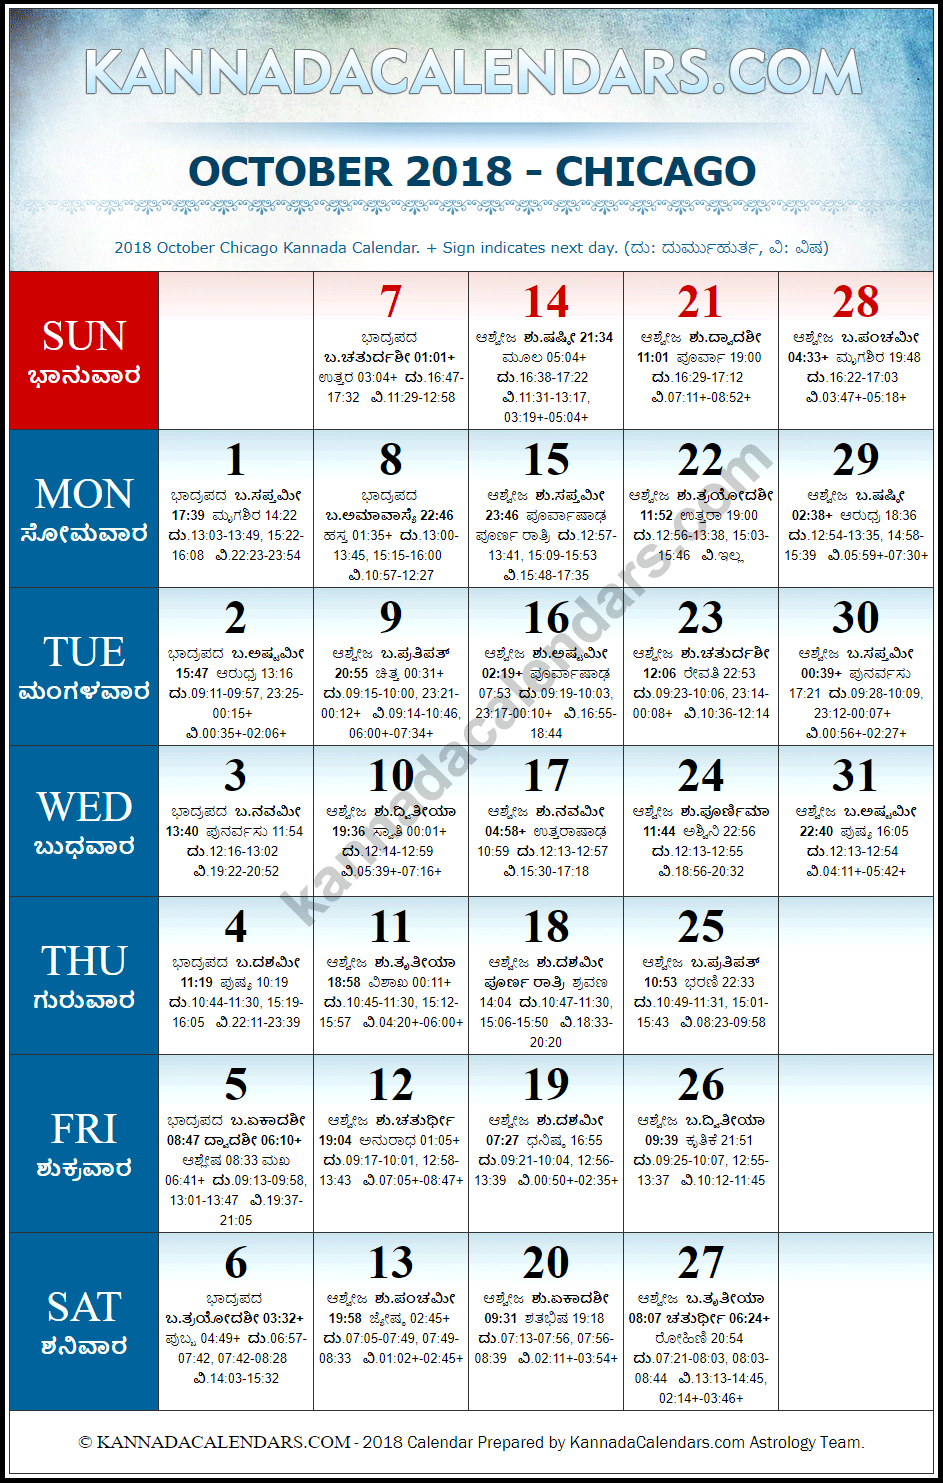 October 2018 Kannada Calendar for Chicago, USA